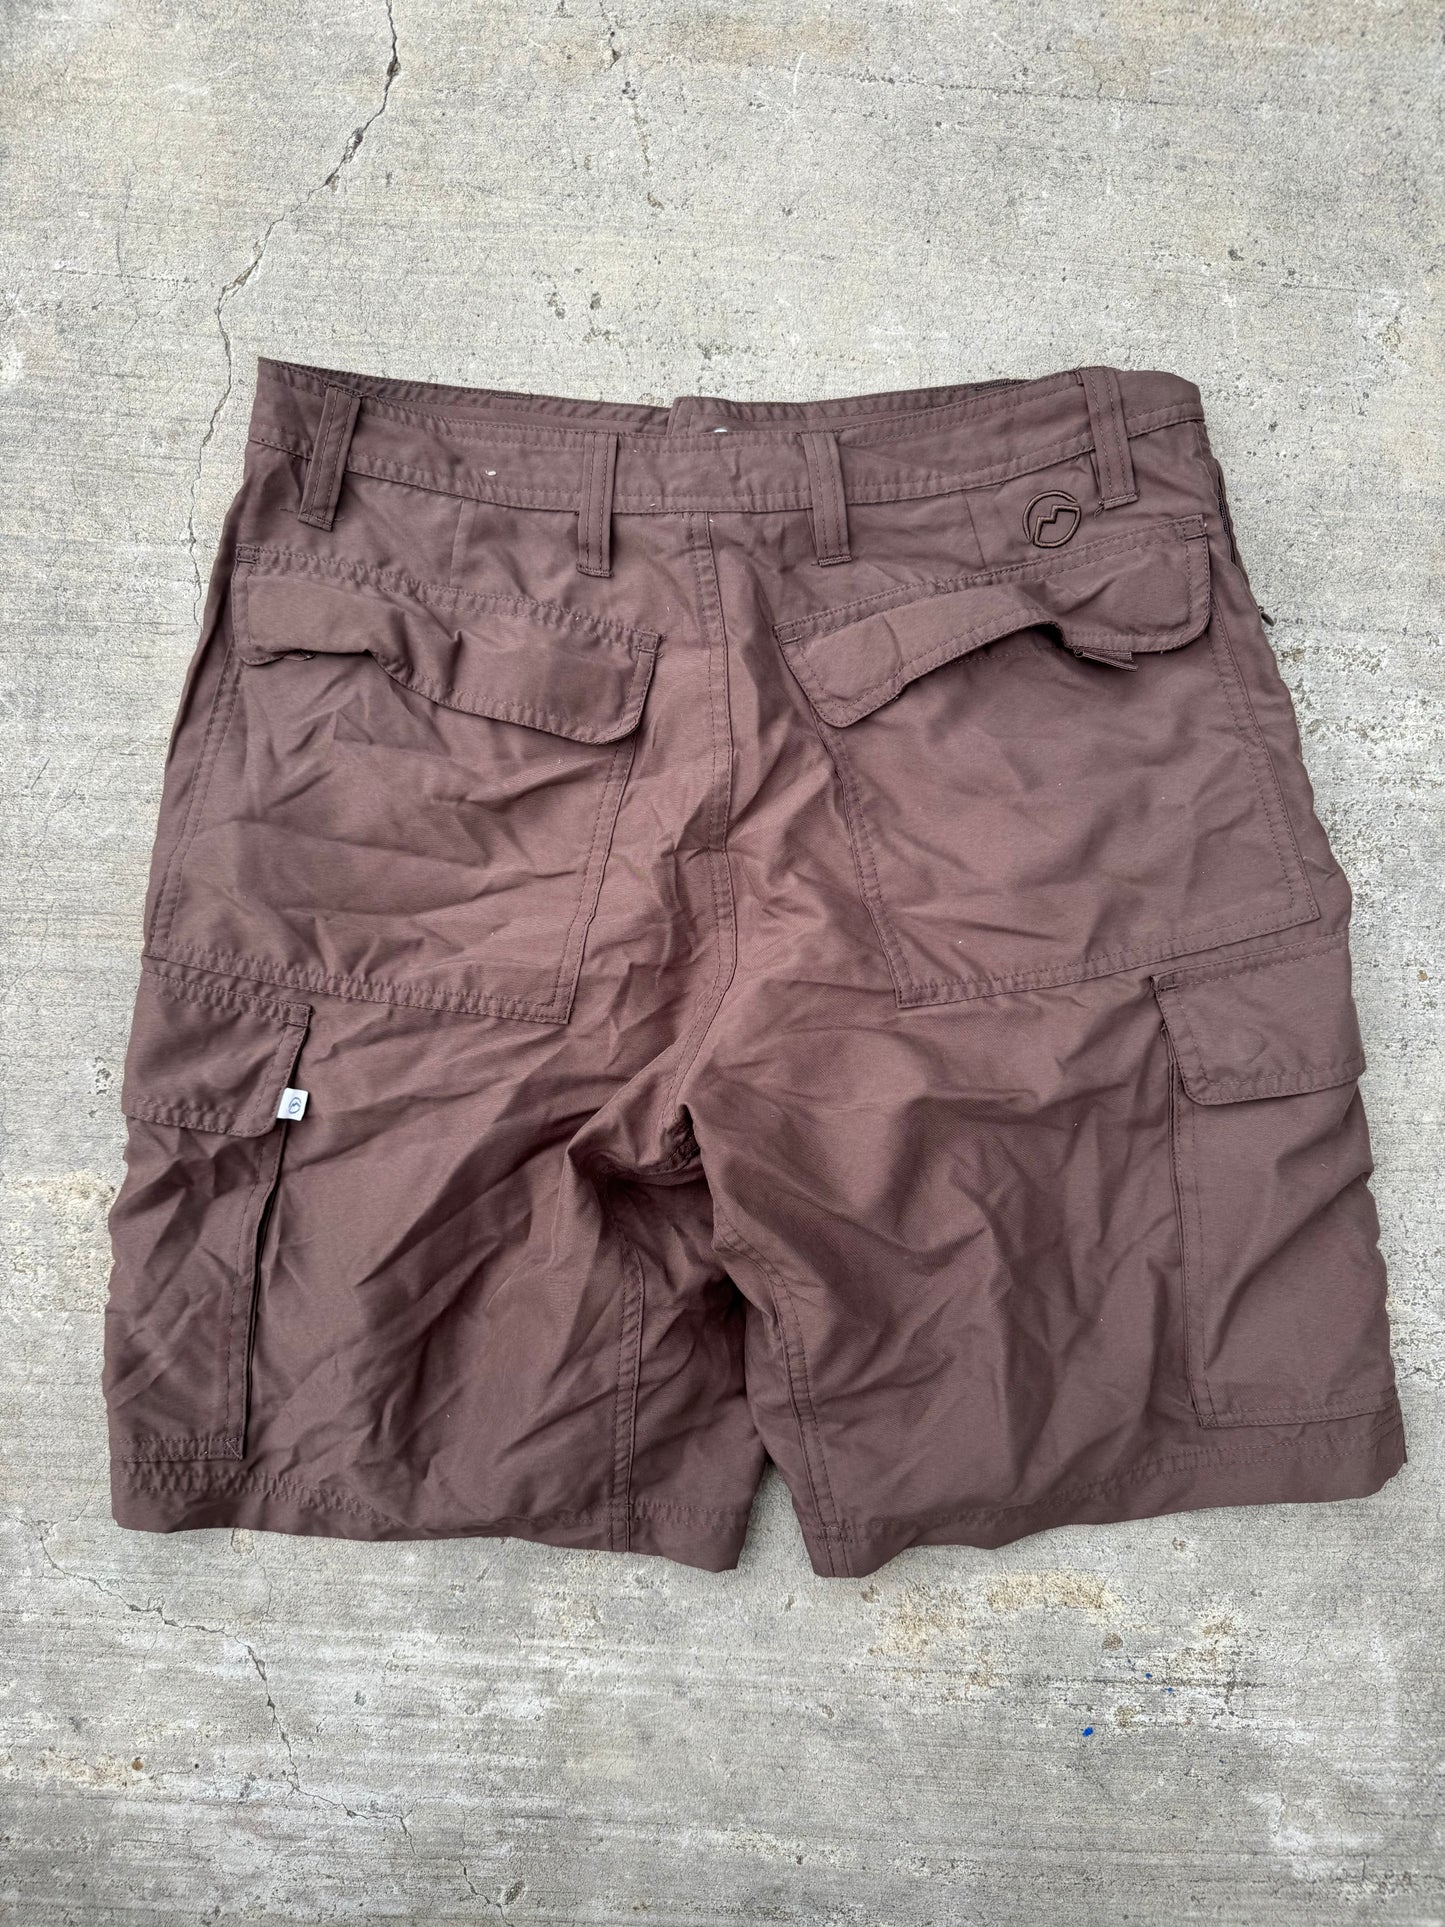 Magellan Brown Shorts - 32 Waist